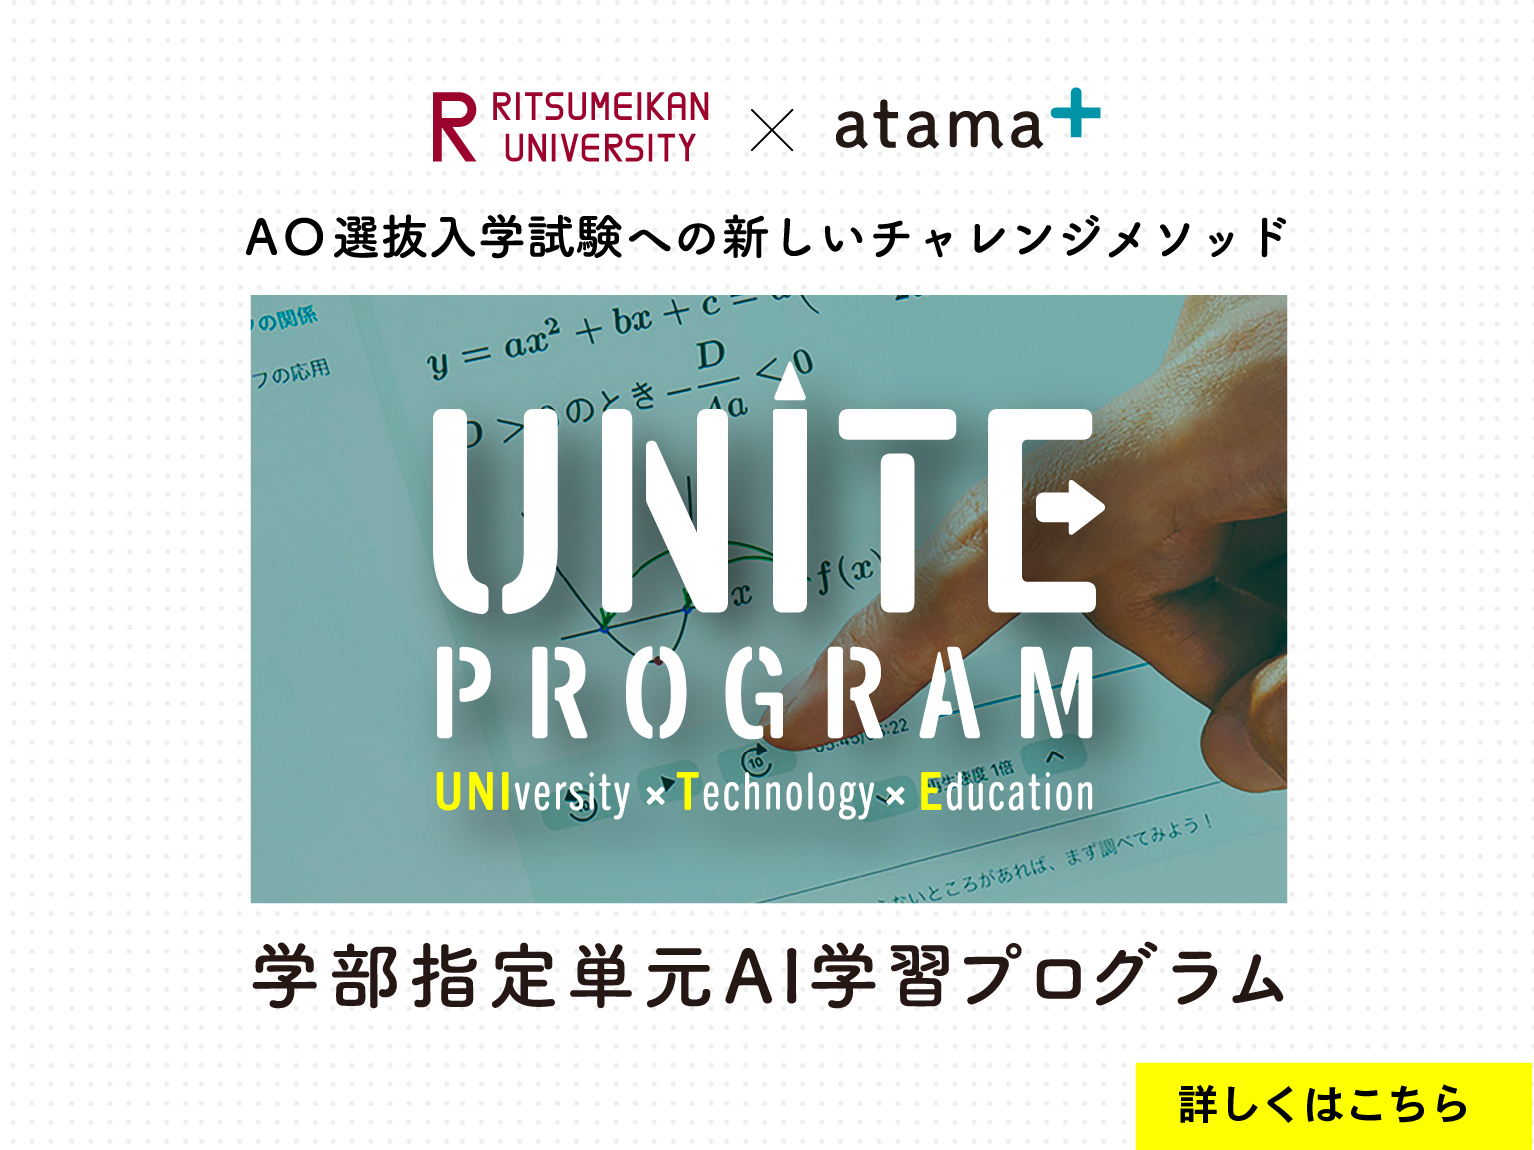 UNITE Program 学部指定単元AI学習プログラム